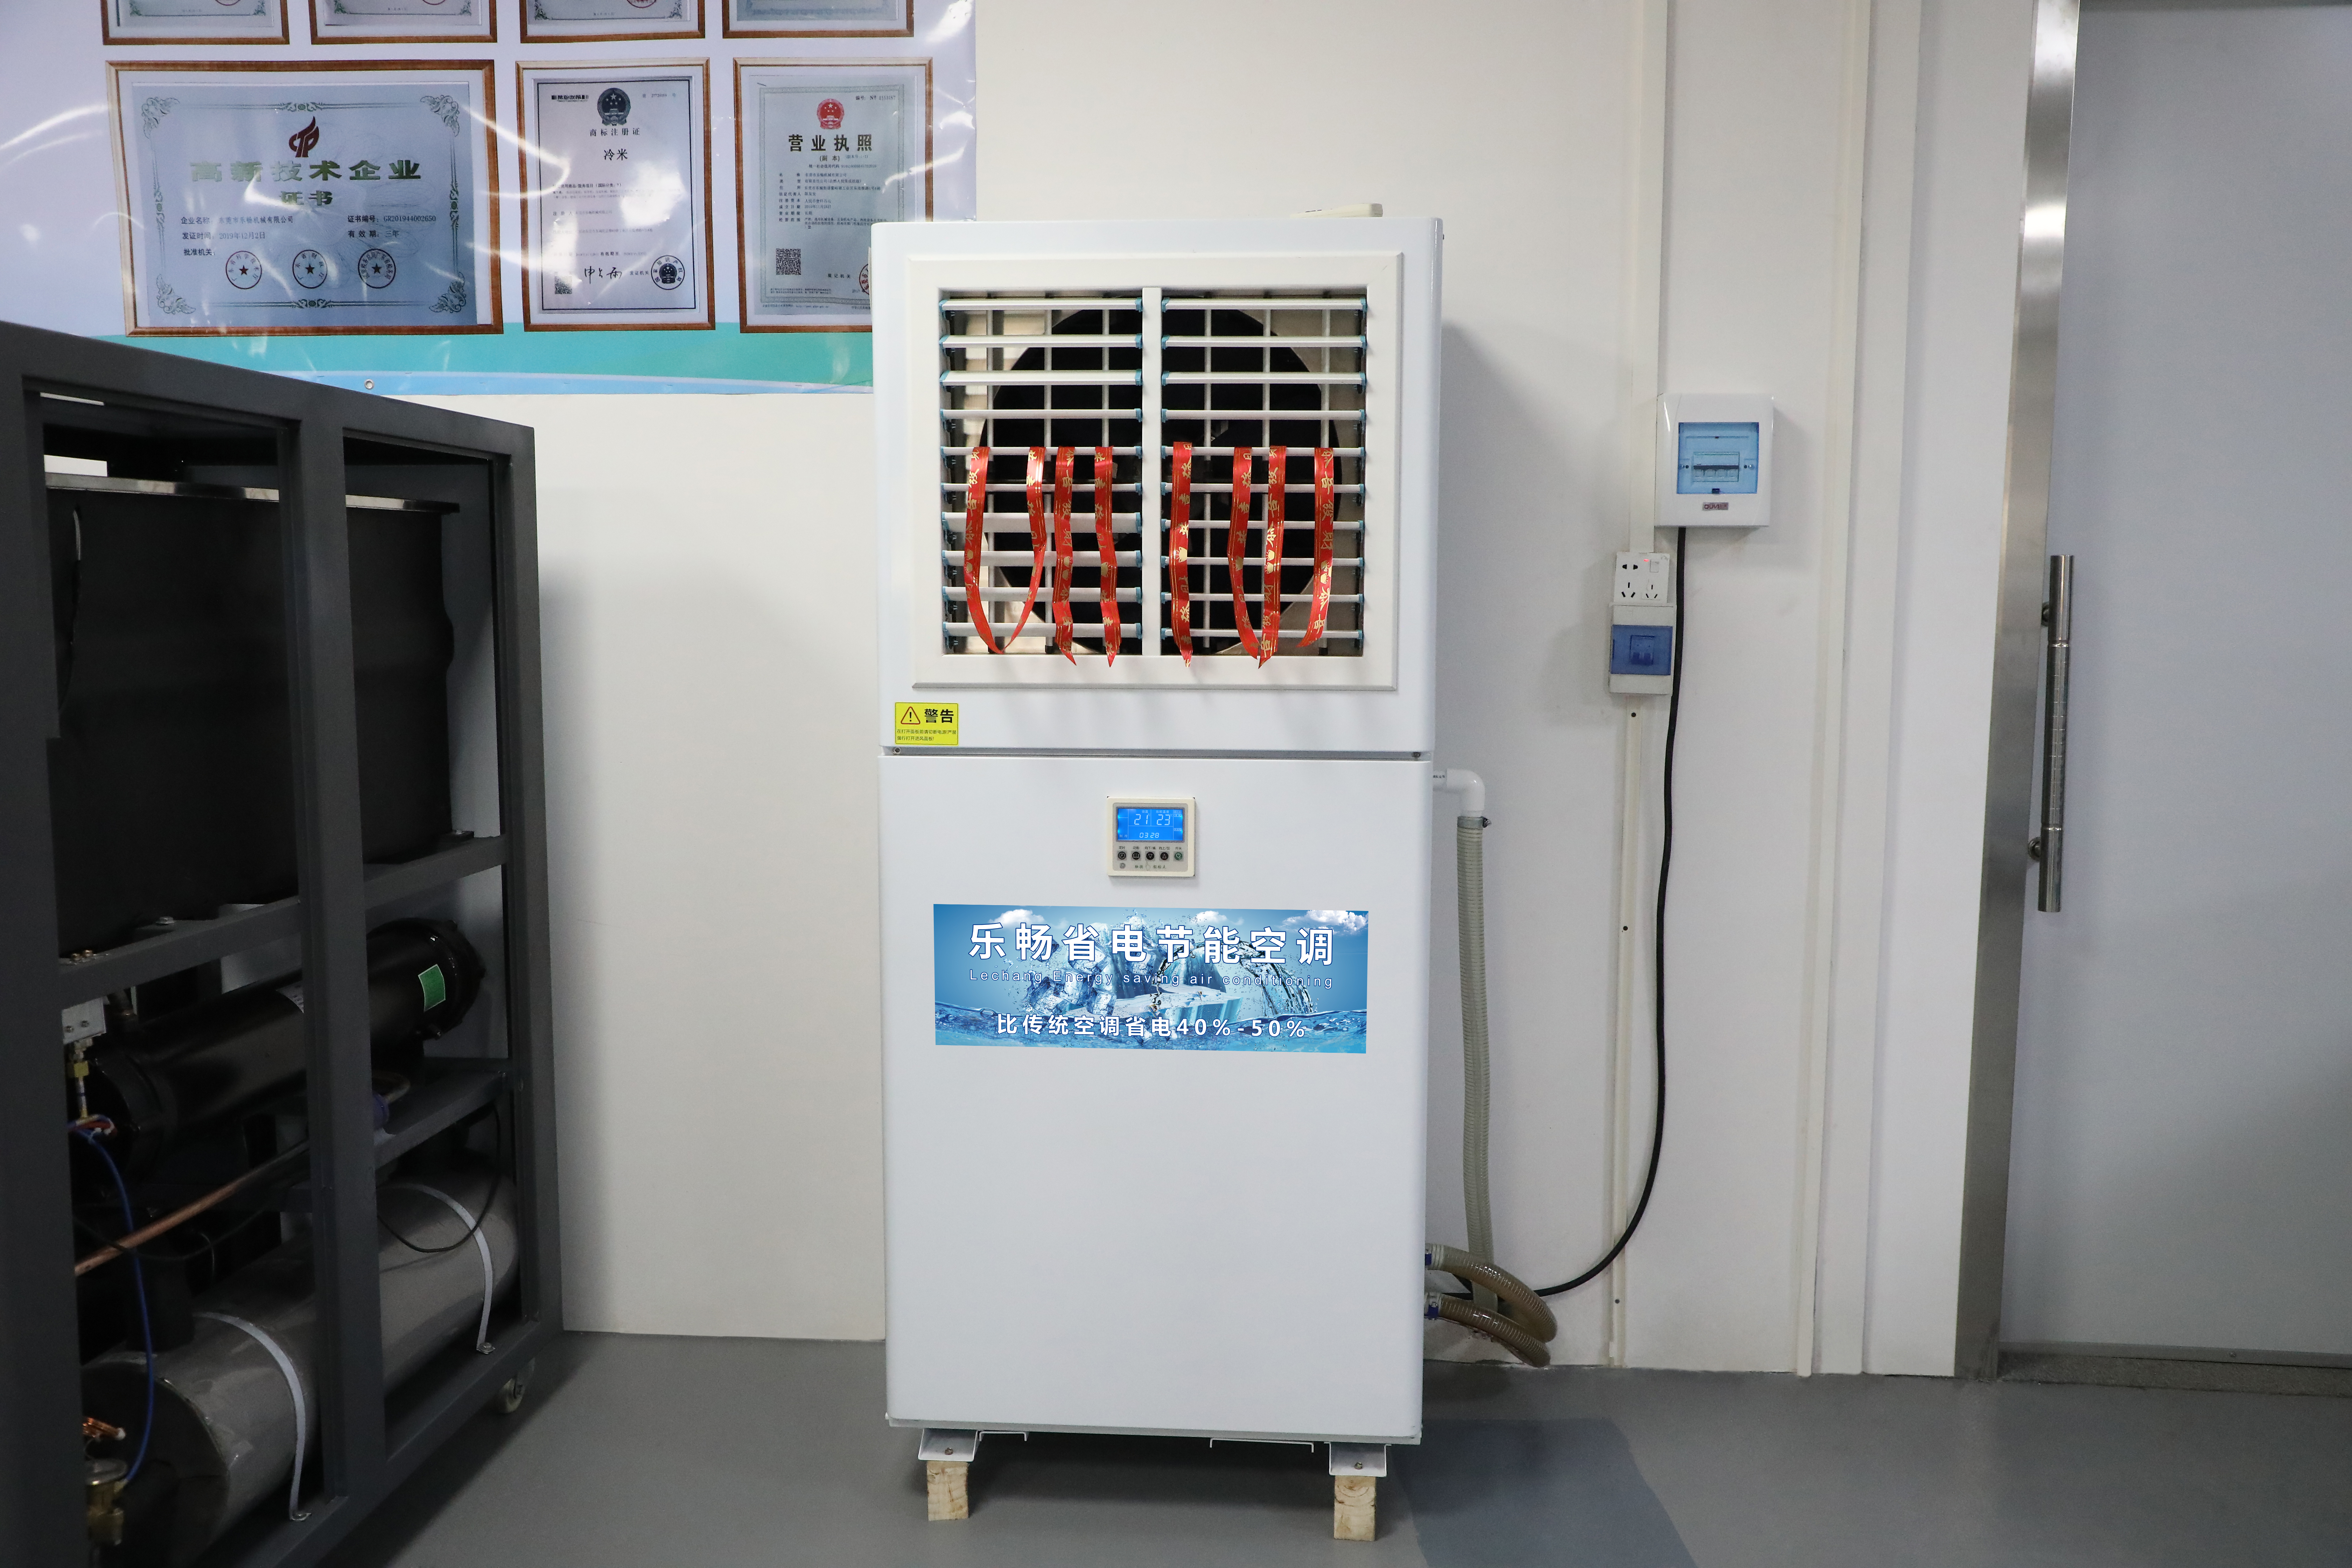 Lechang refrigeration has developed three new equipment